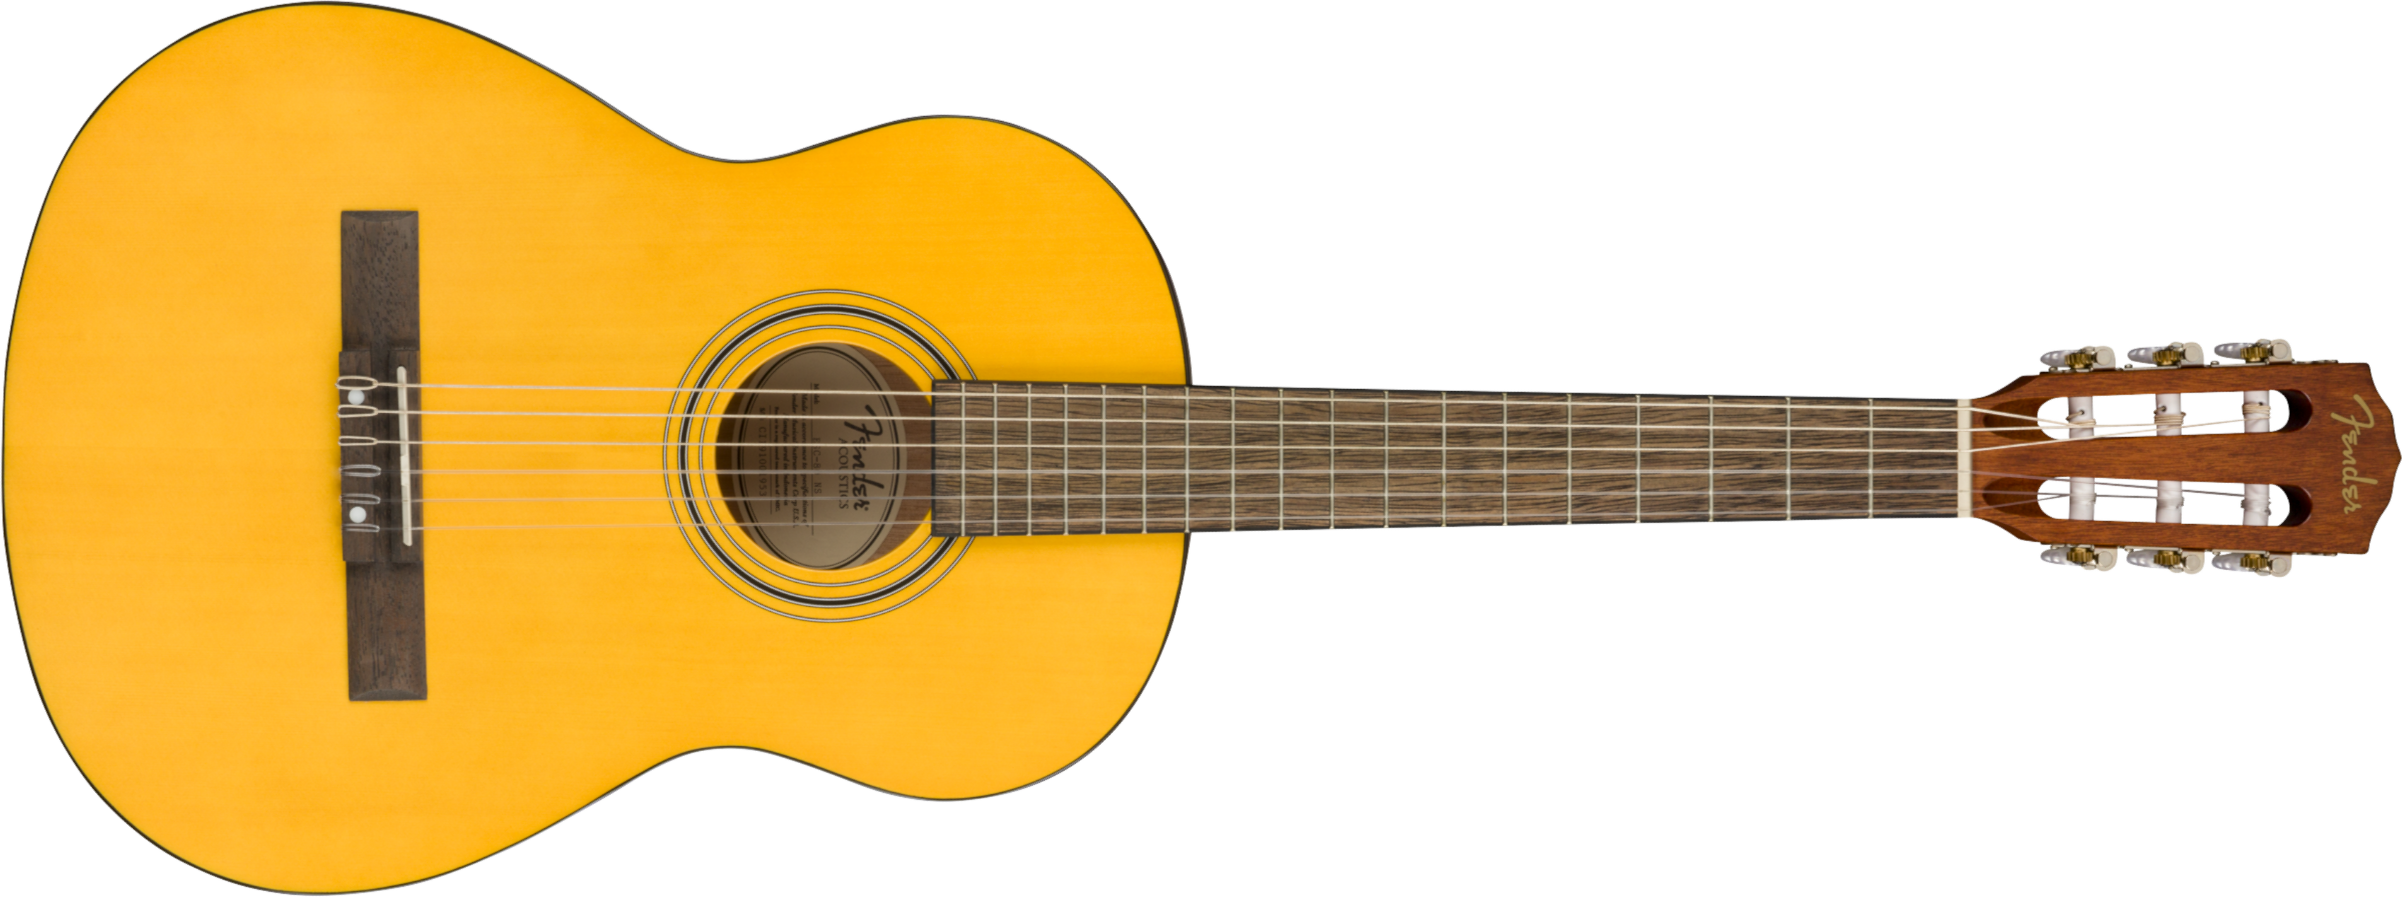 Fender Esc 80 Classical - Naturel - Classical guitar 4/4 size - Main picture